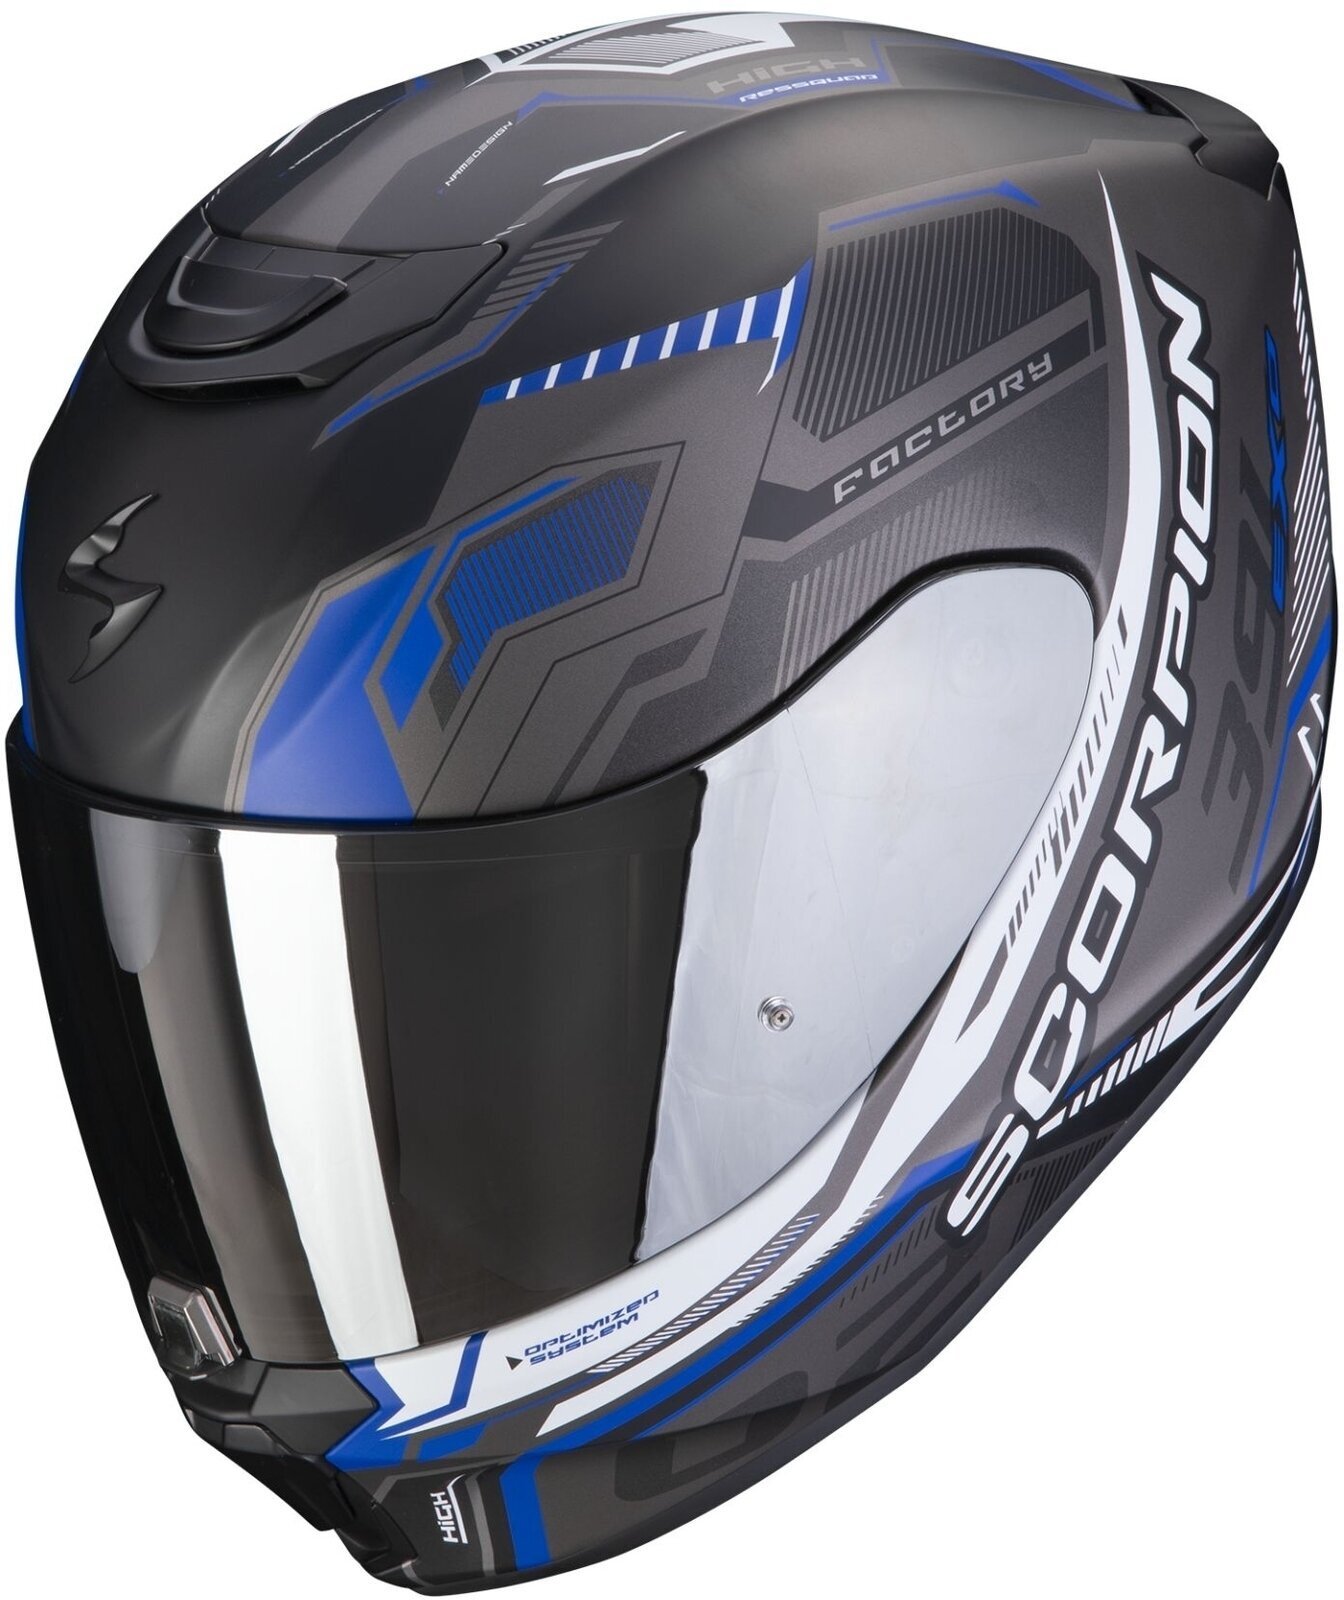 Helm Scorpion EXO 391 HAUT Black/Silver/Blue S Helm